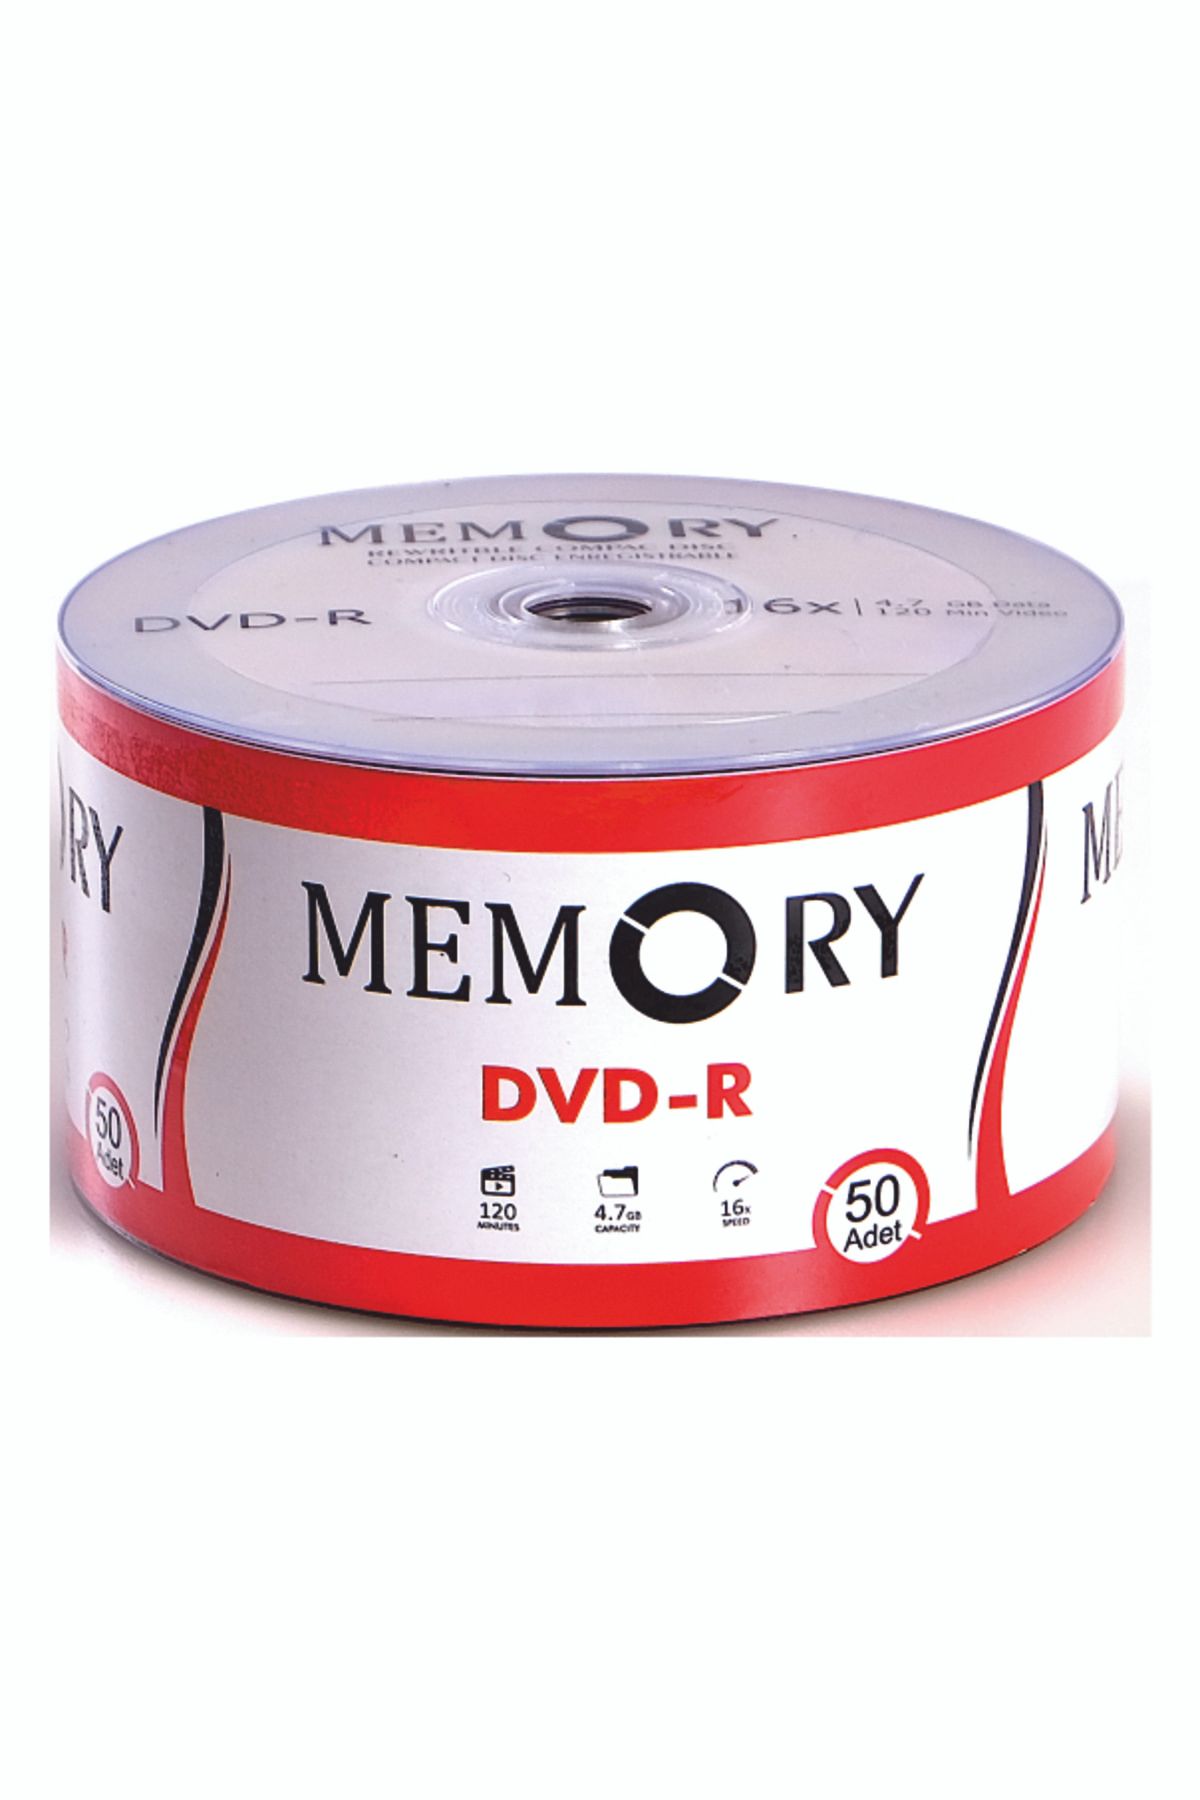 MEMORY Boş Dvd-r 4,7gb 16x 120 Dk 50 Adet